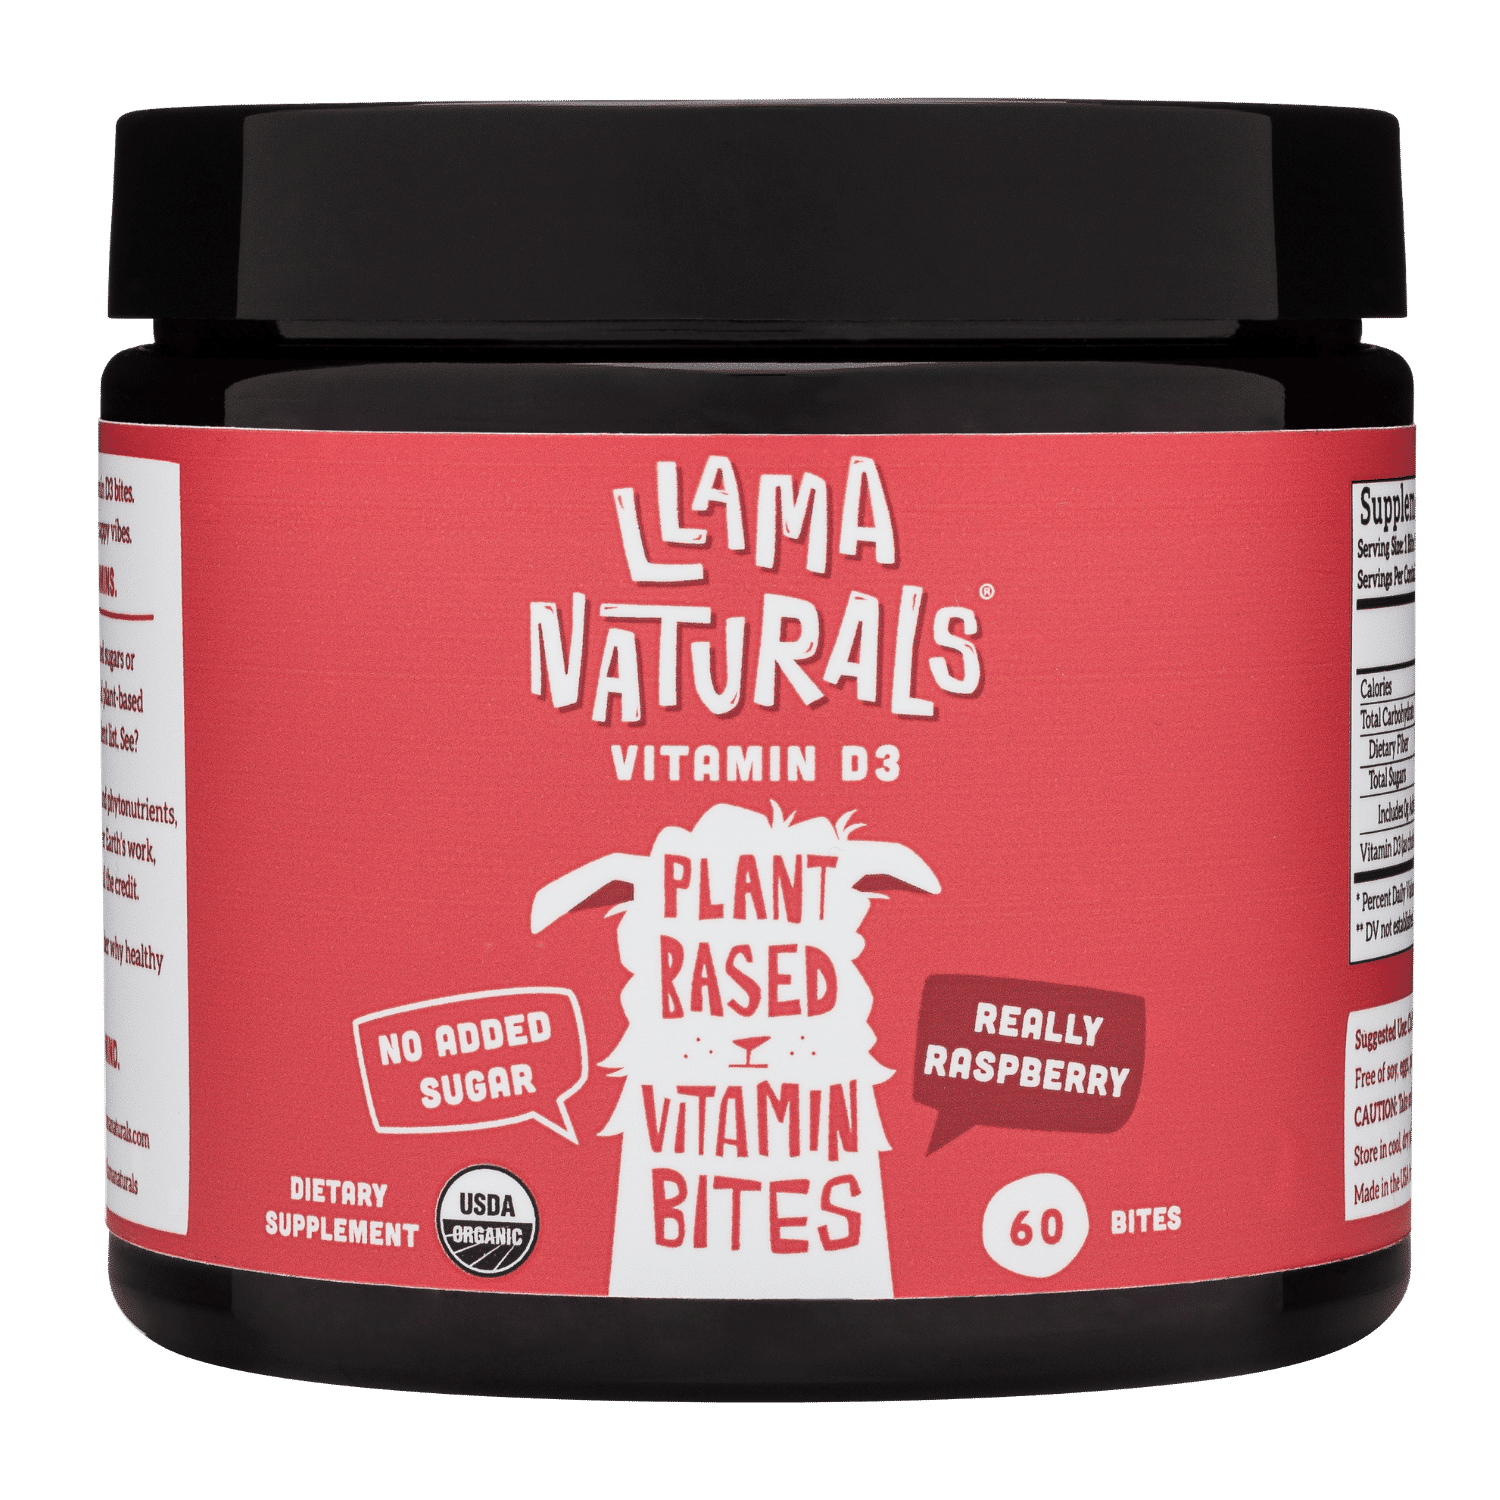 Llama Naturals Vitamin D from Gimme the Good Stuff